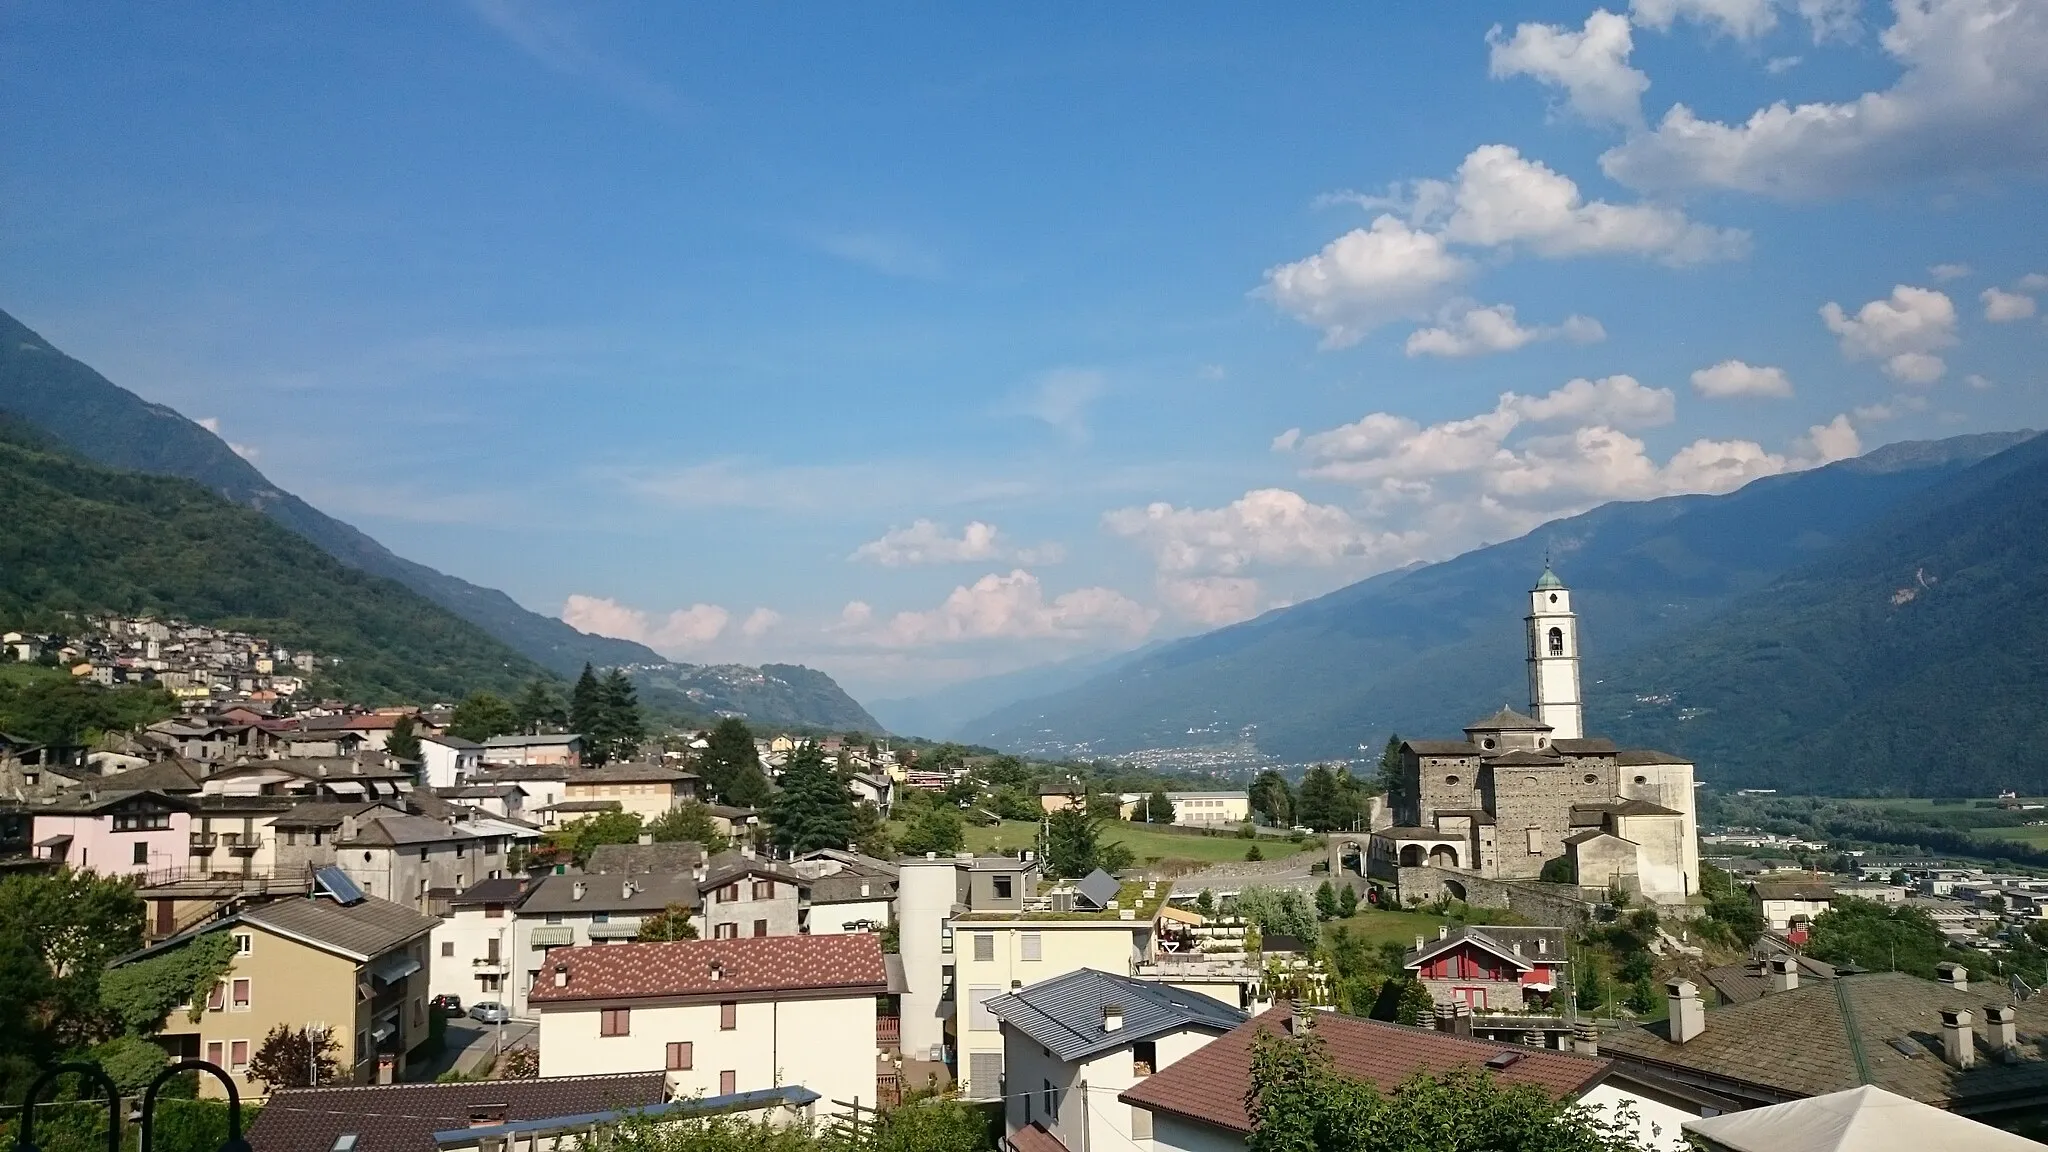 Afbeelding van Berbenno di Valtellina